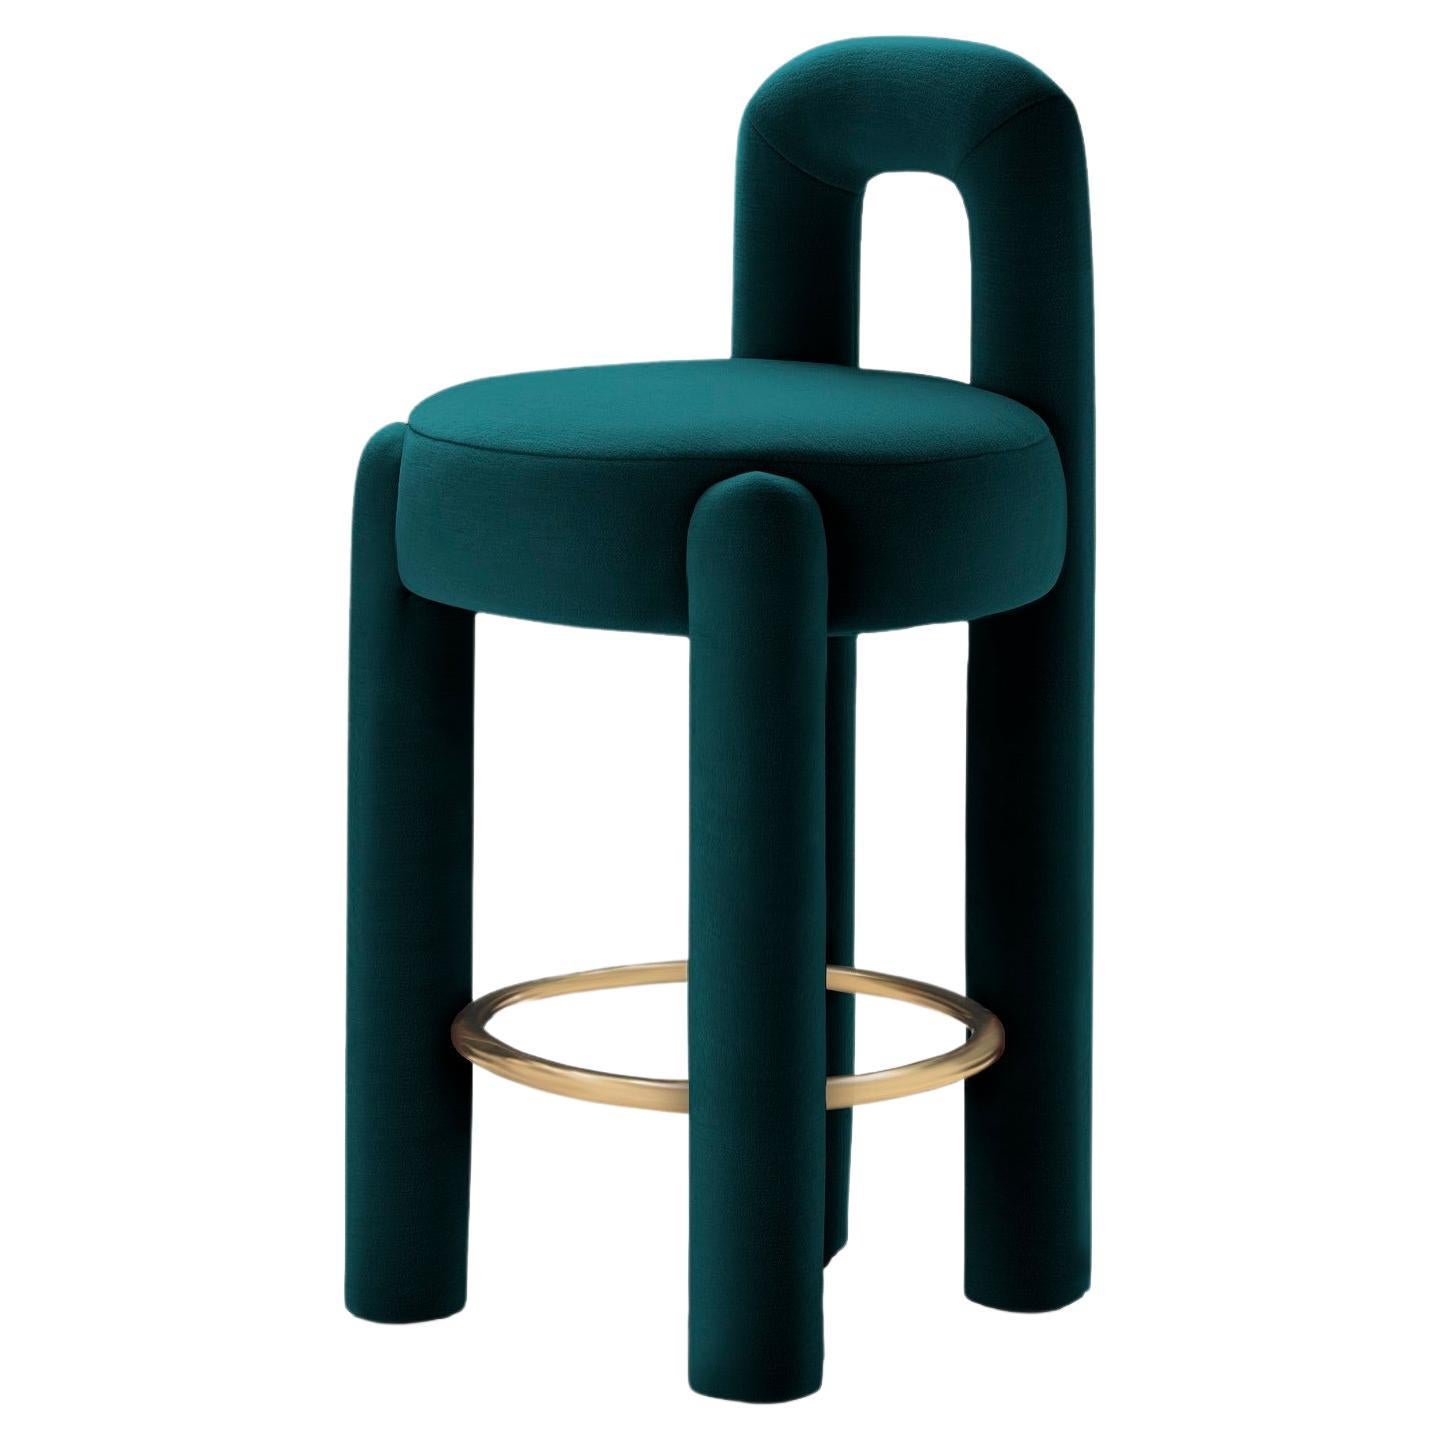 DOOQ! Organic Modern Marlon Counter Chair in Teal Kvadrat by P. Franceschini For Sale